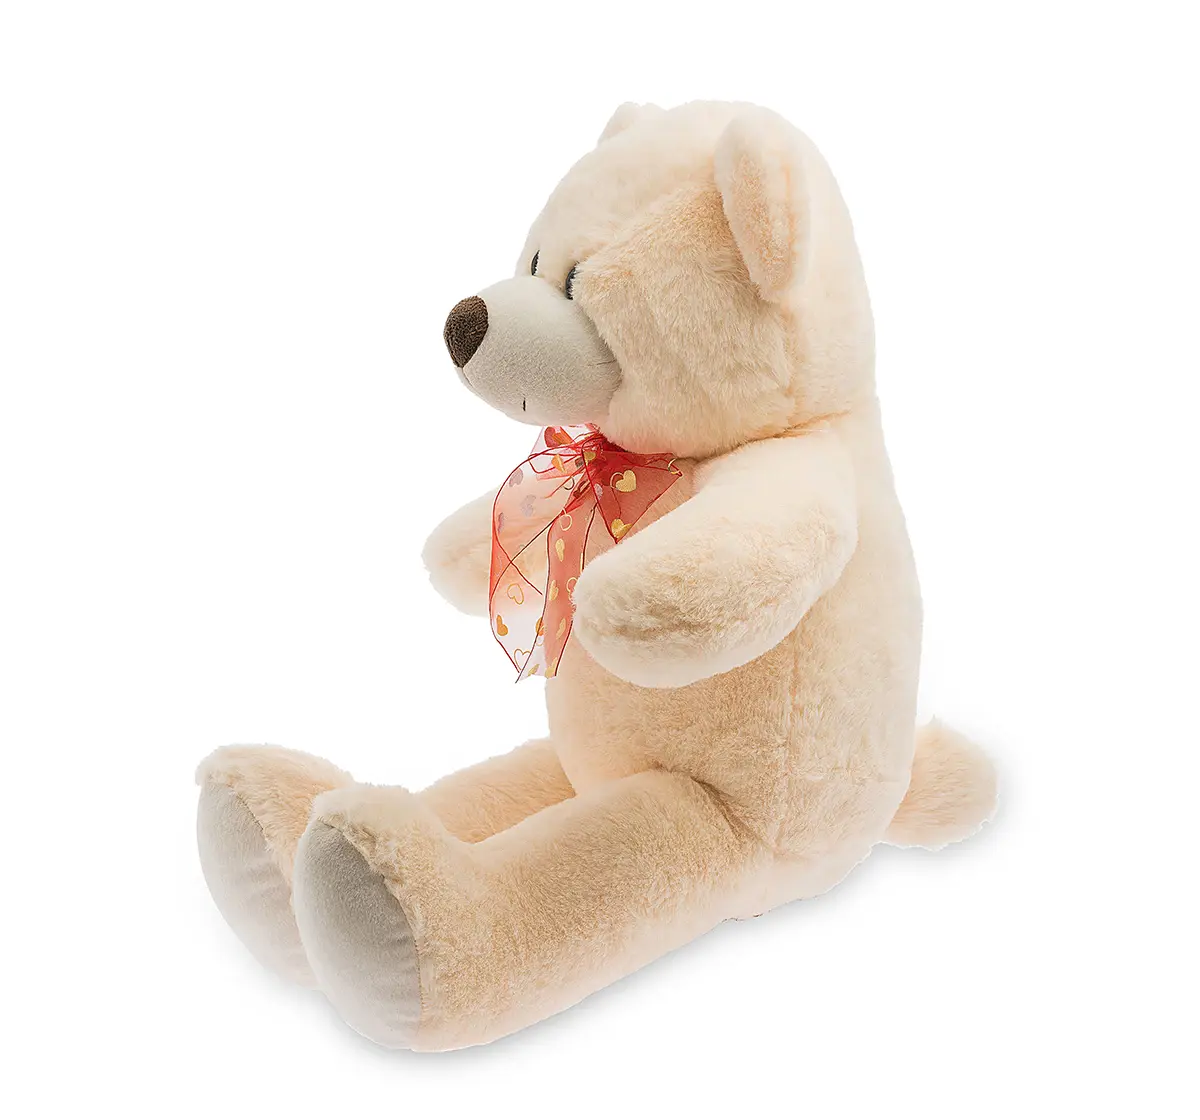 Dimpy Toys Standing Bear Beige 50 Cm,  3Y+(Beige)